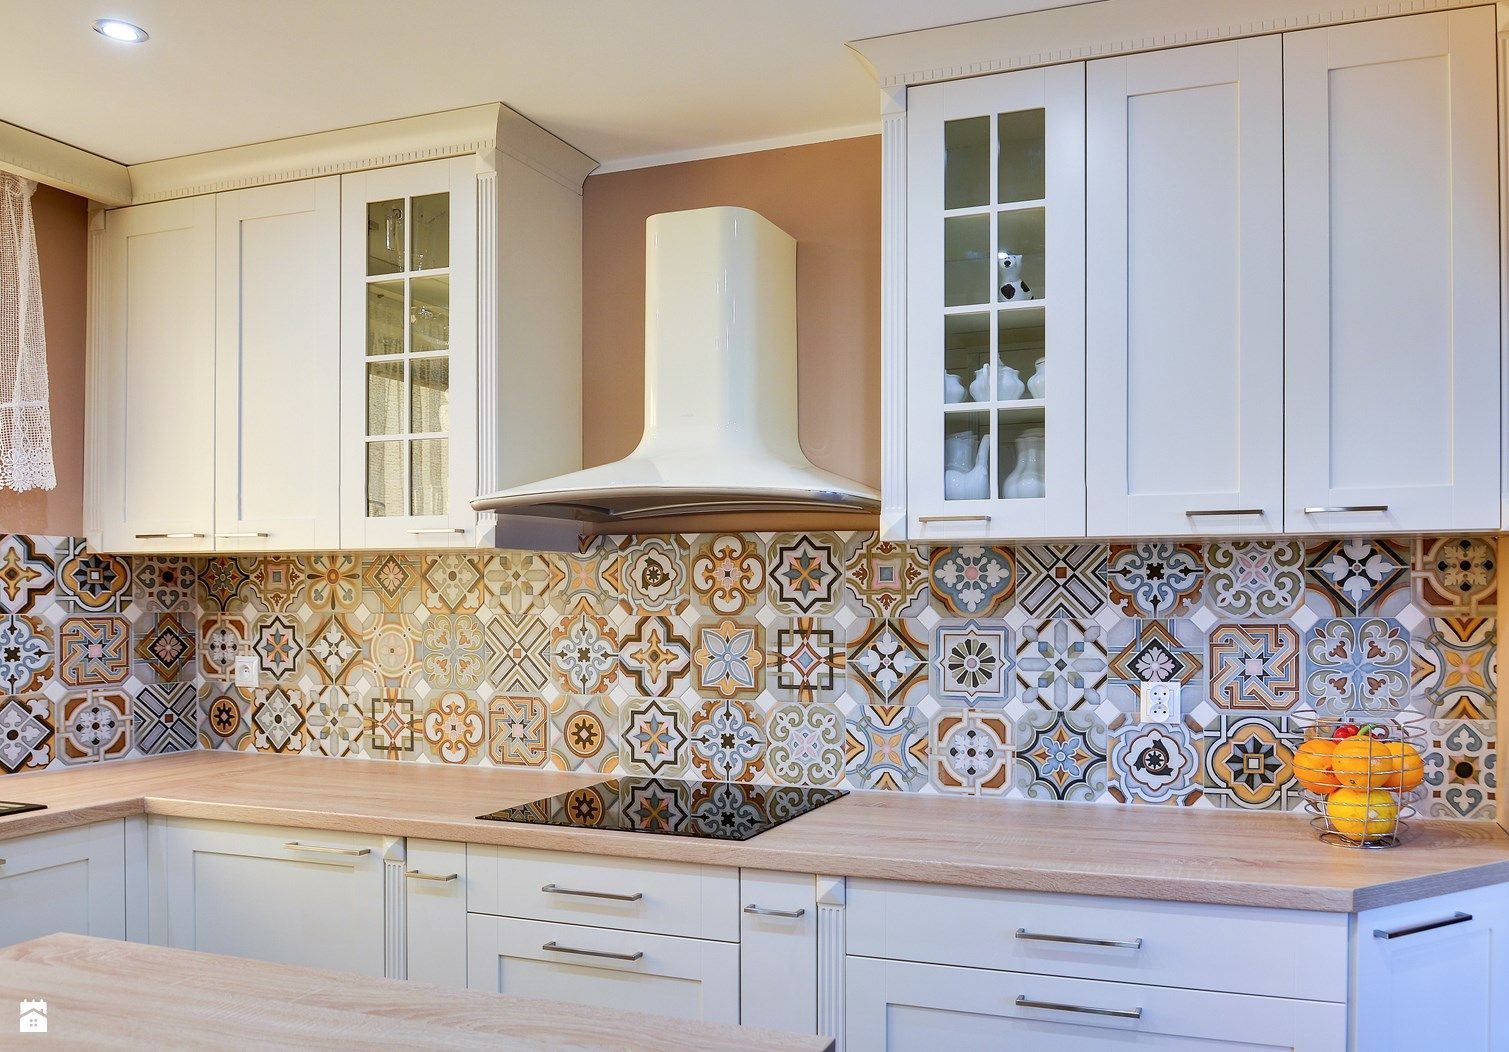 White Brick Backsplash In Kitchen Awesome Backsplash Designs Home Decorating Ideas Design and